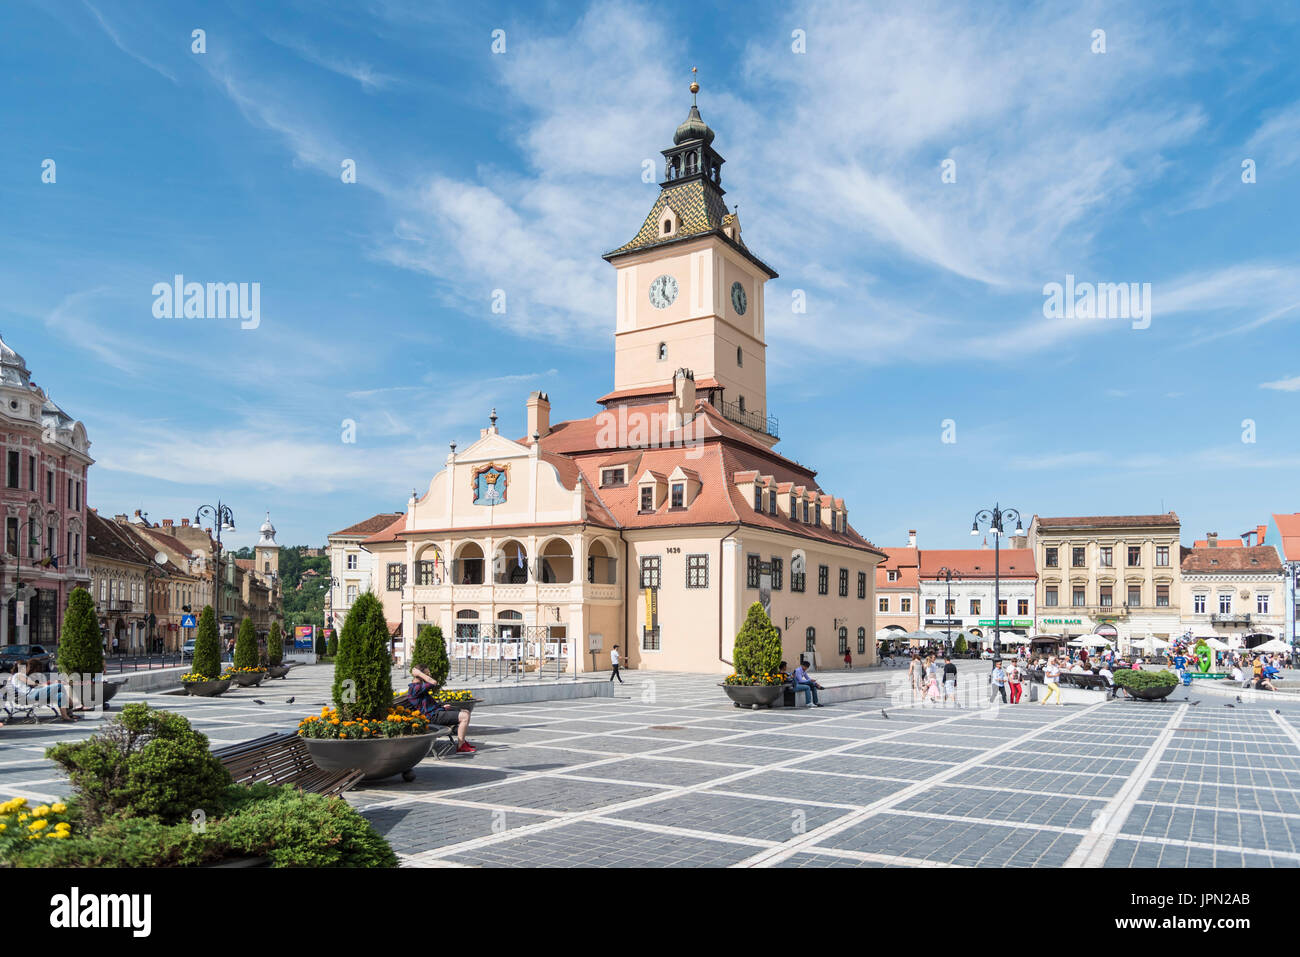 Der Rat Marktplatz/Piata Sfatului in Brasov, Rumänien Stockfoto